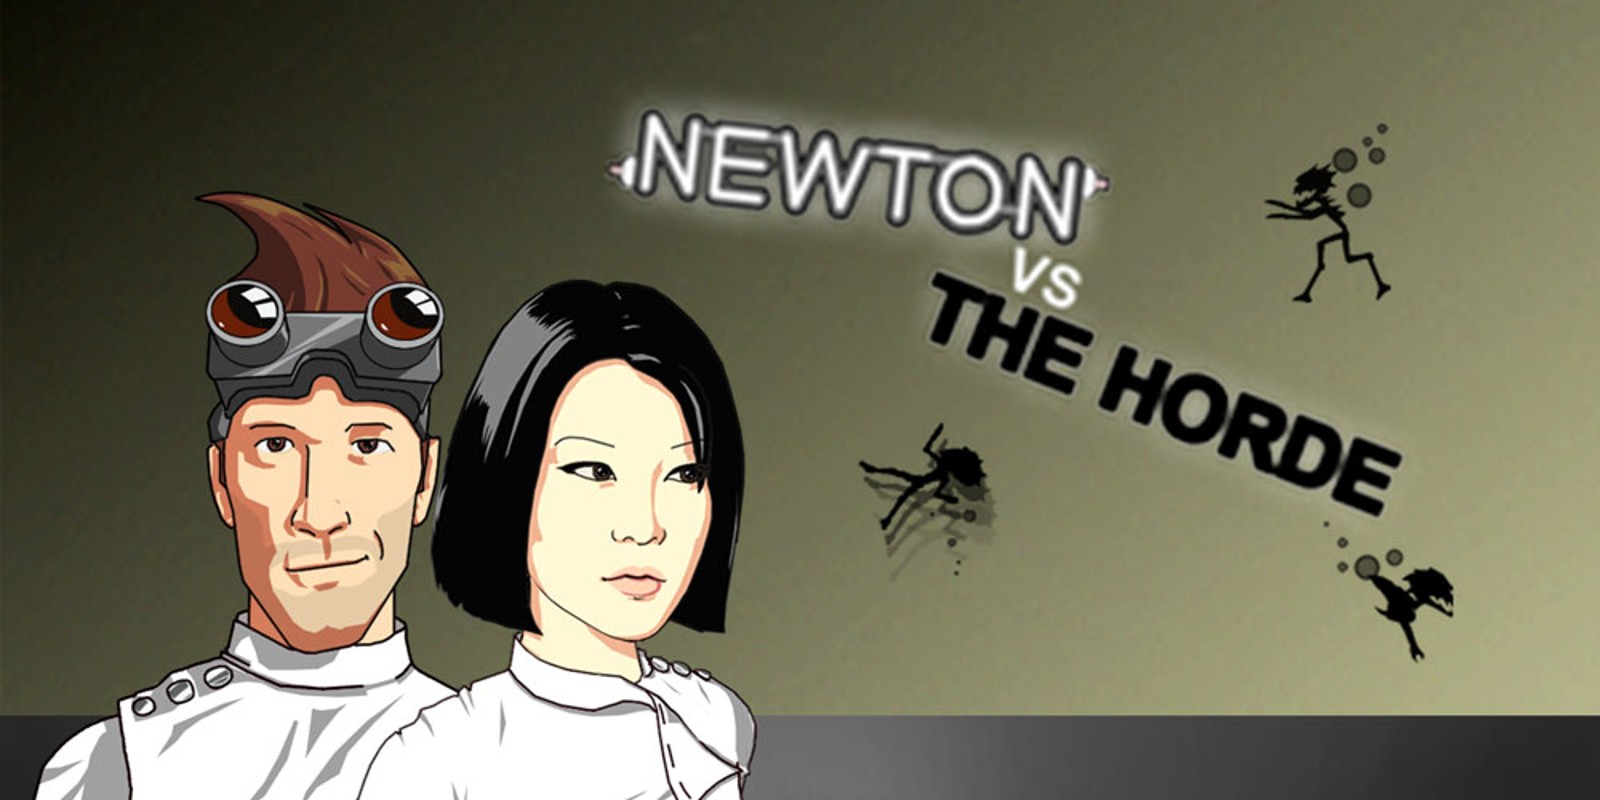 Newton Vs The Horde